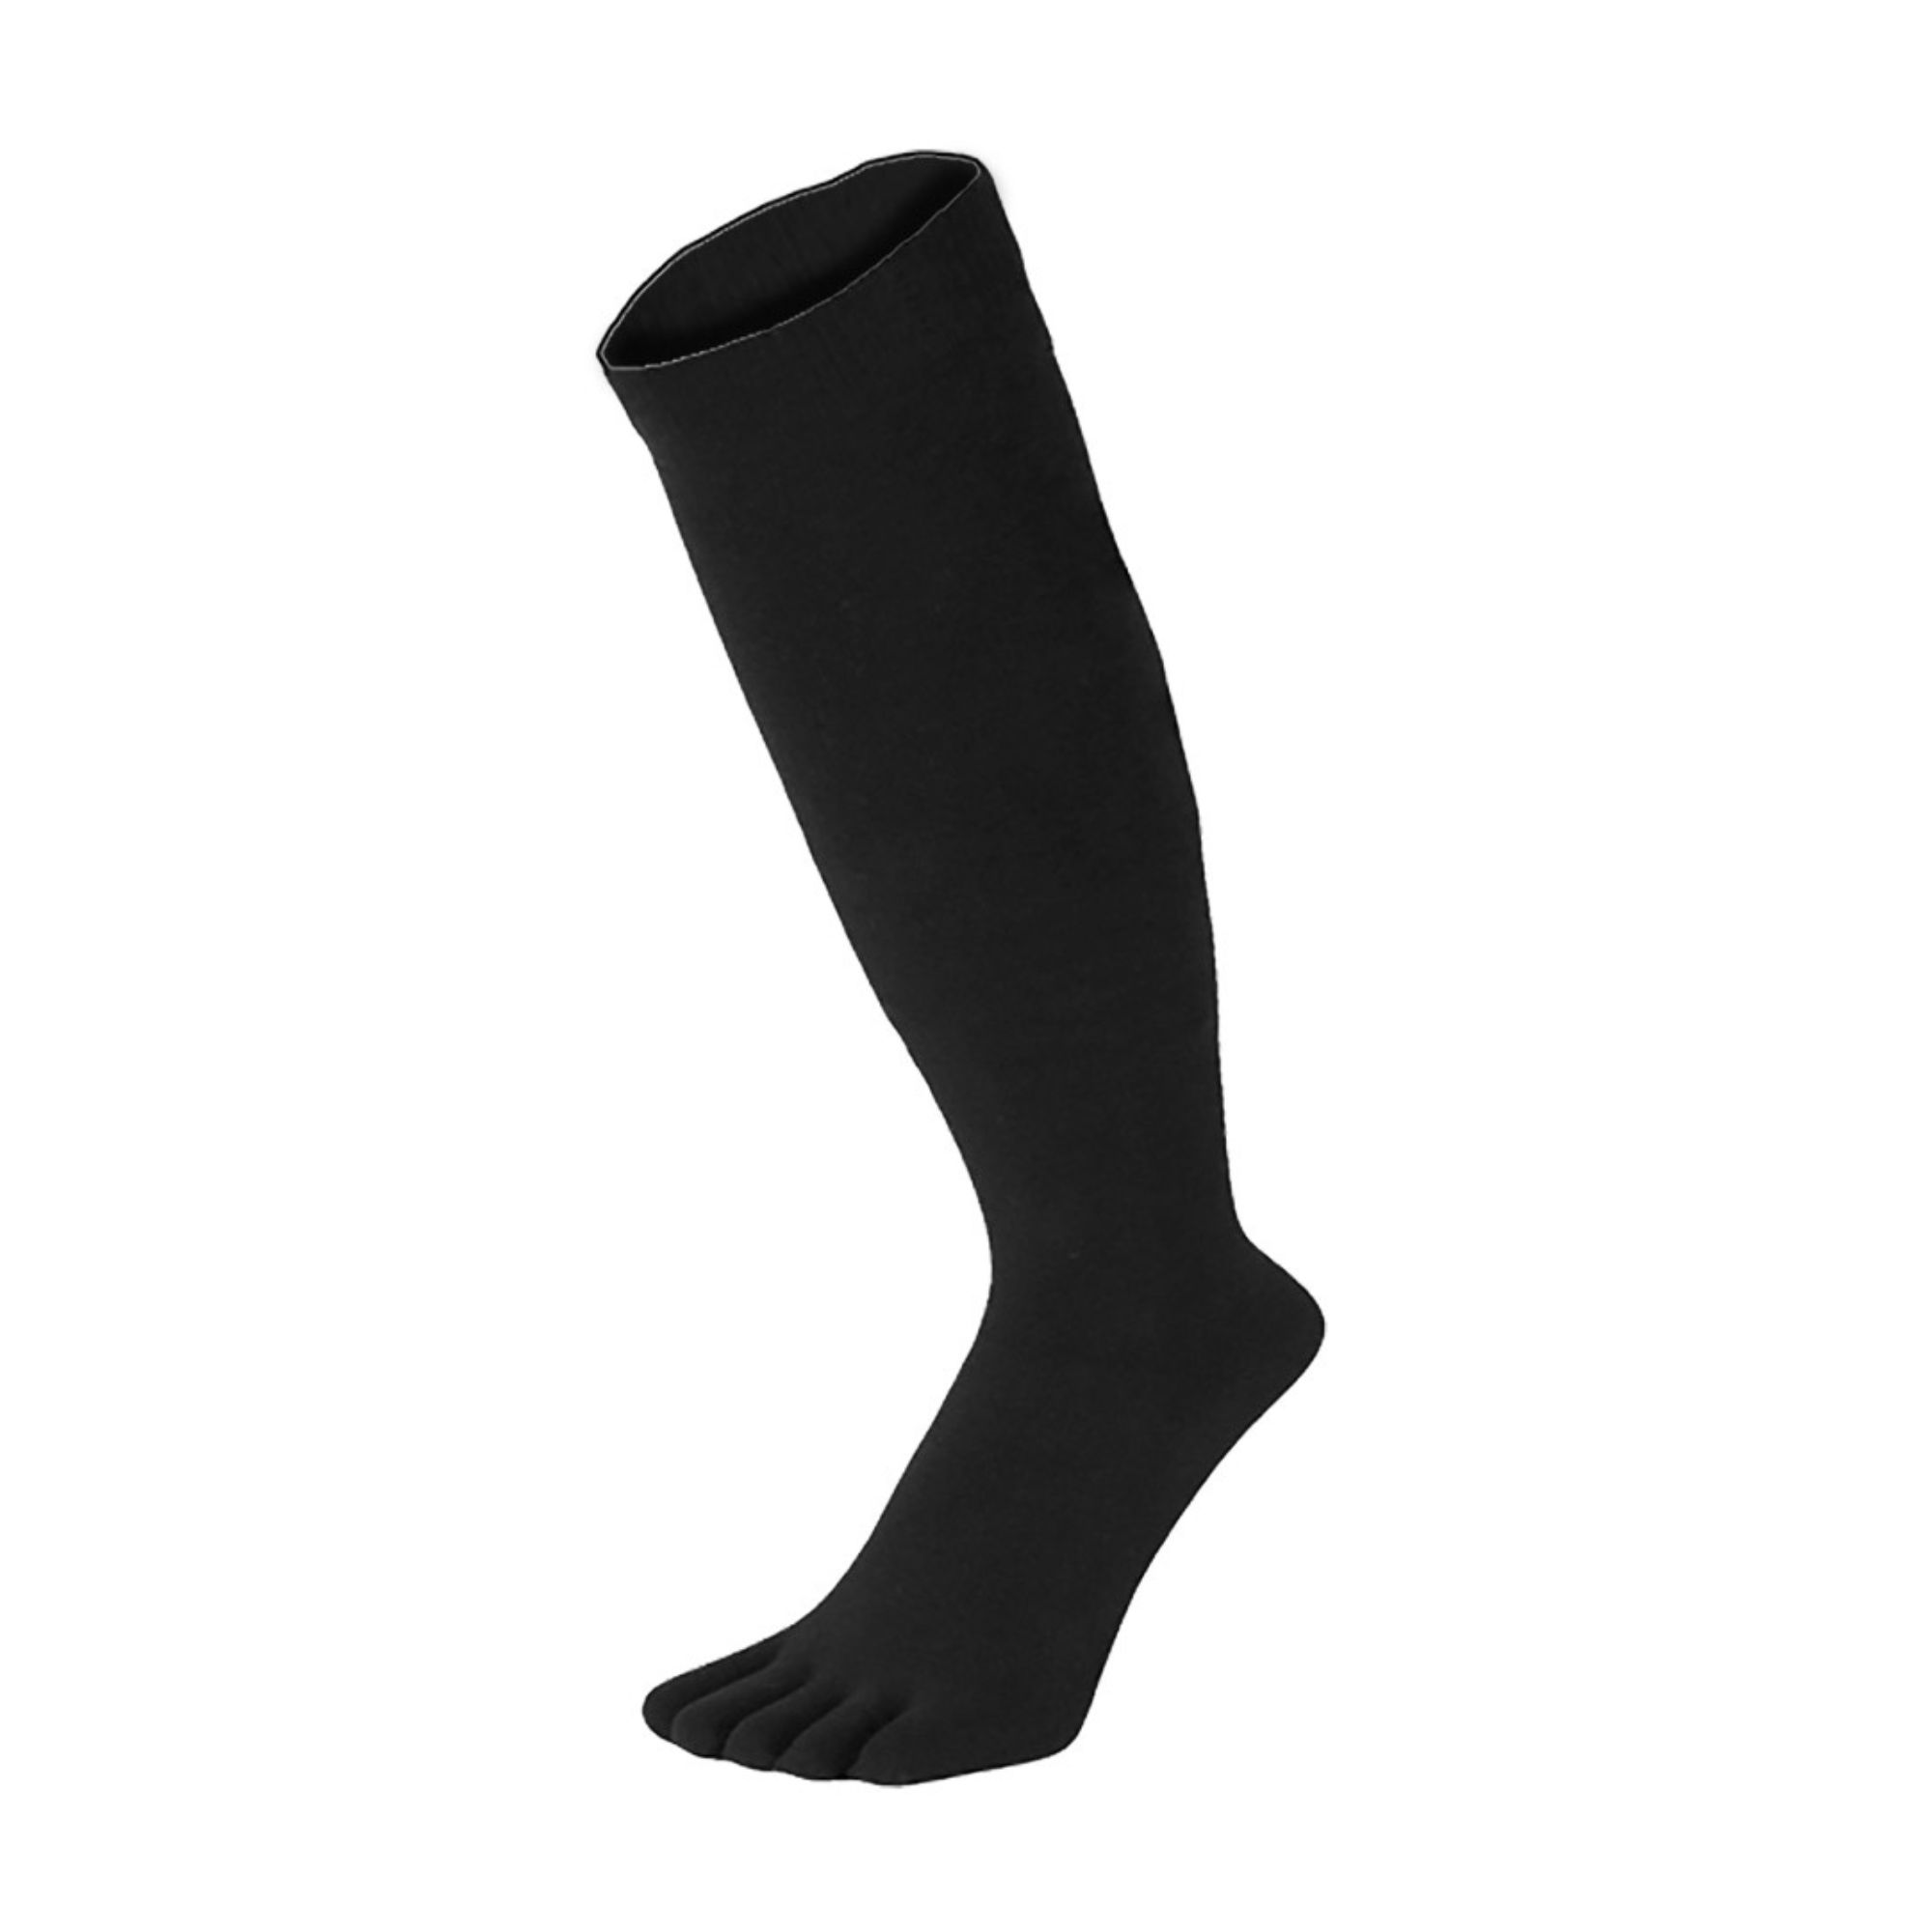 Knee High Toe Socks by TOETOE